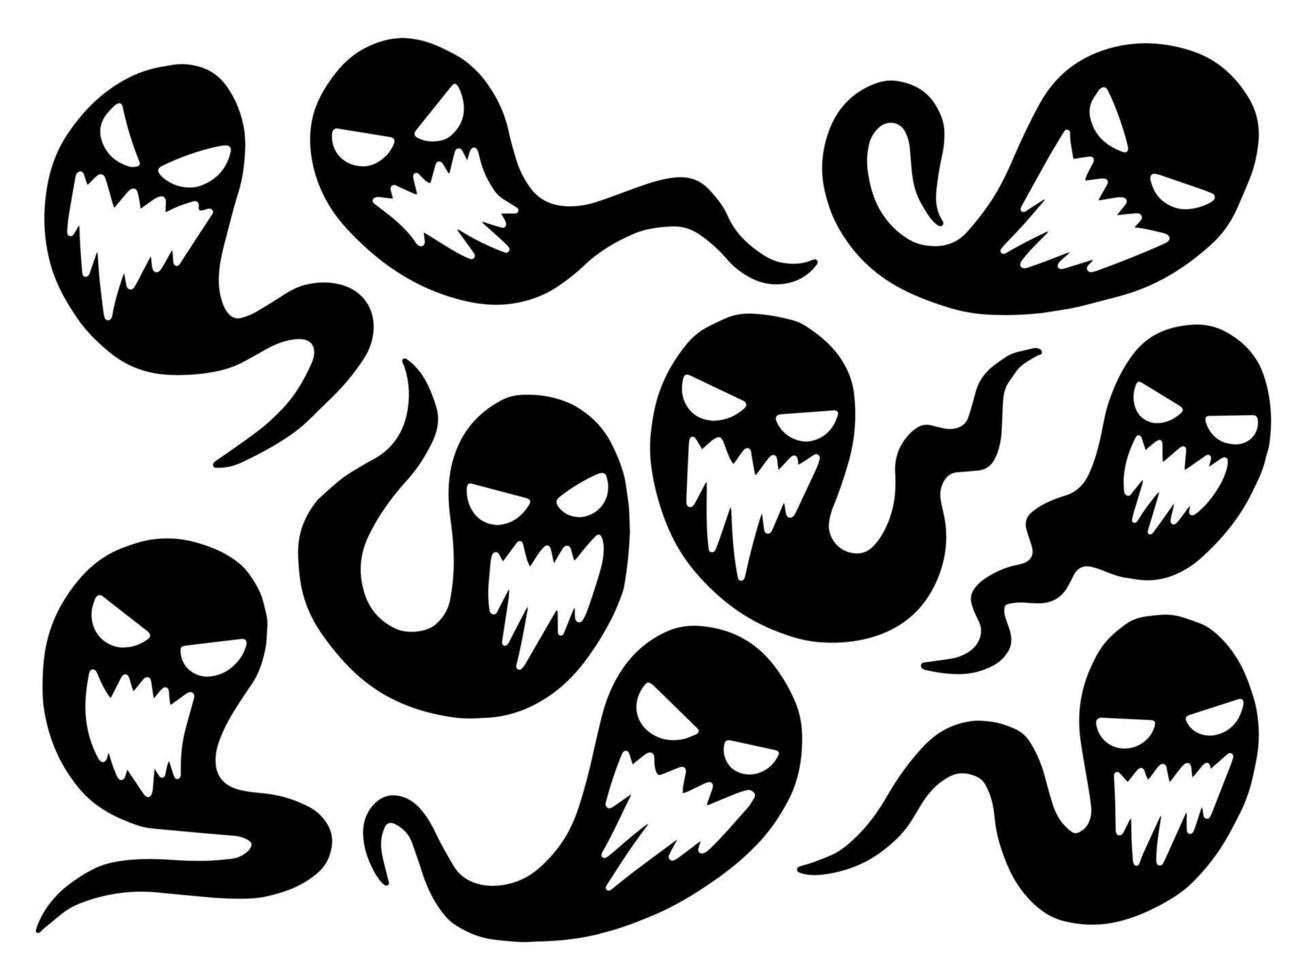 Halloween Ghost Scary Illustration vector